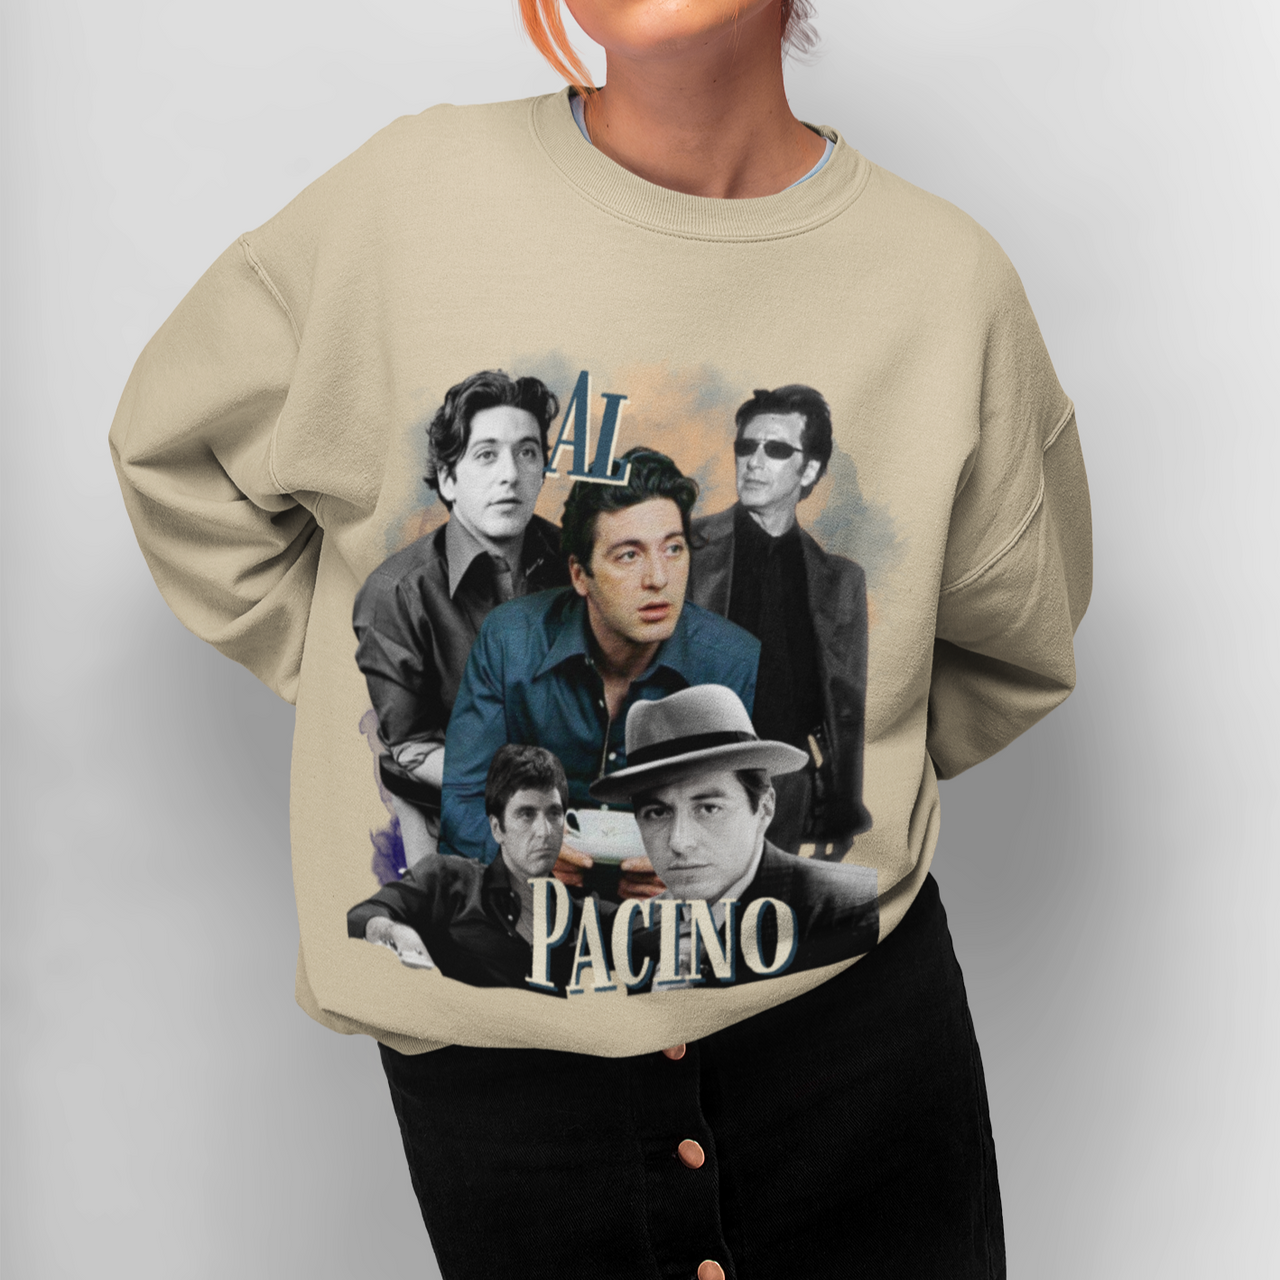 Al Pacino Sweatshirt, 90s Rap Style Bootleg The Godfather Pullover Crewneck, Scarface Movie Fan Gift